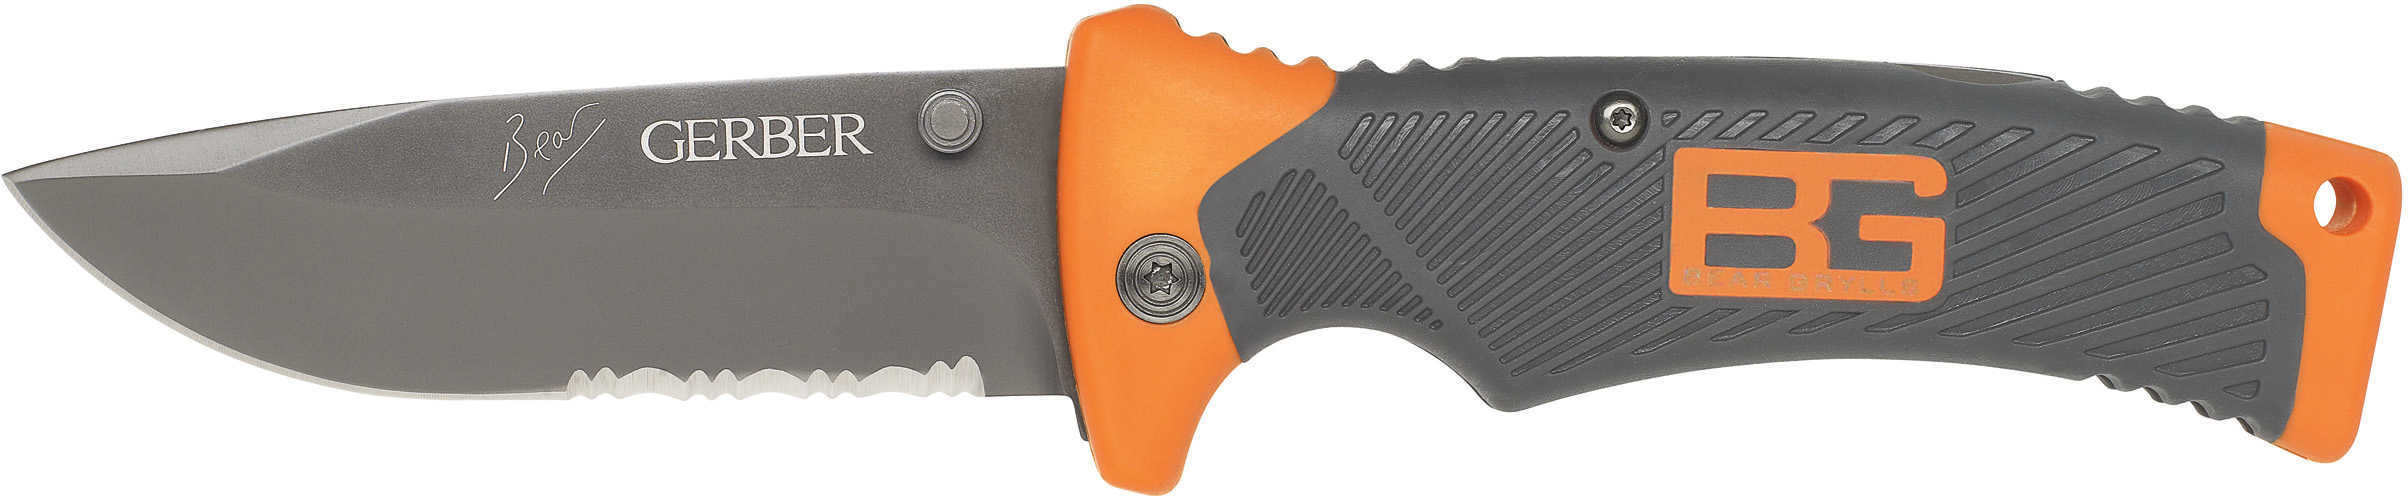 Gerber Blades Bear Grylls Series Folding Sheath Knife 31-000752